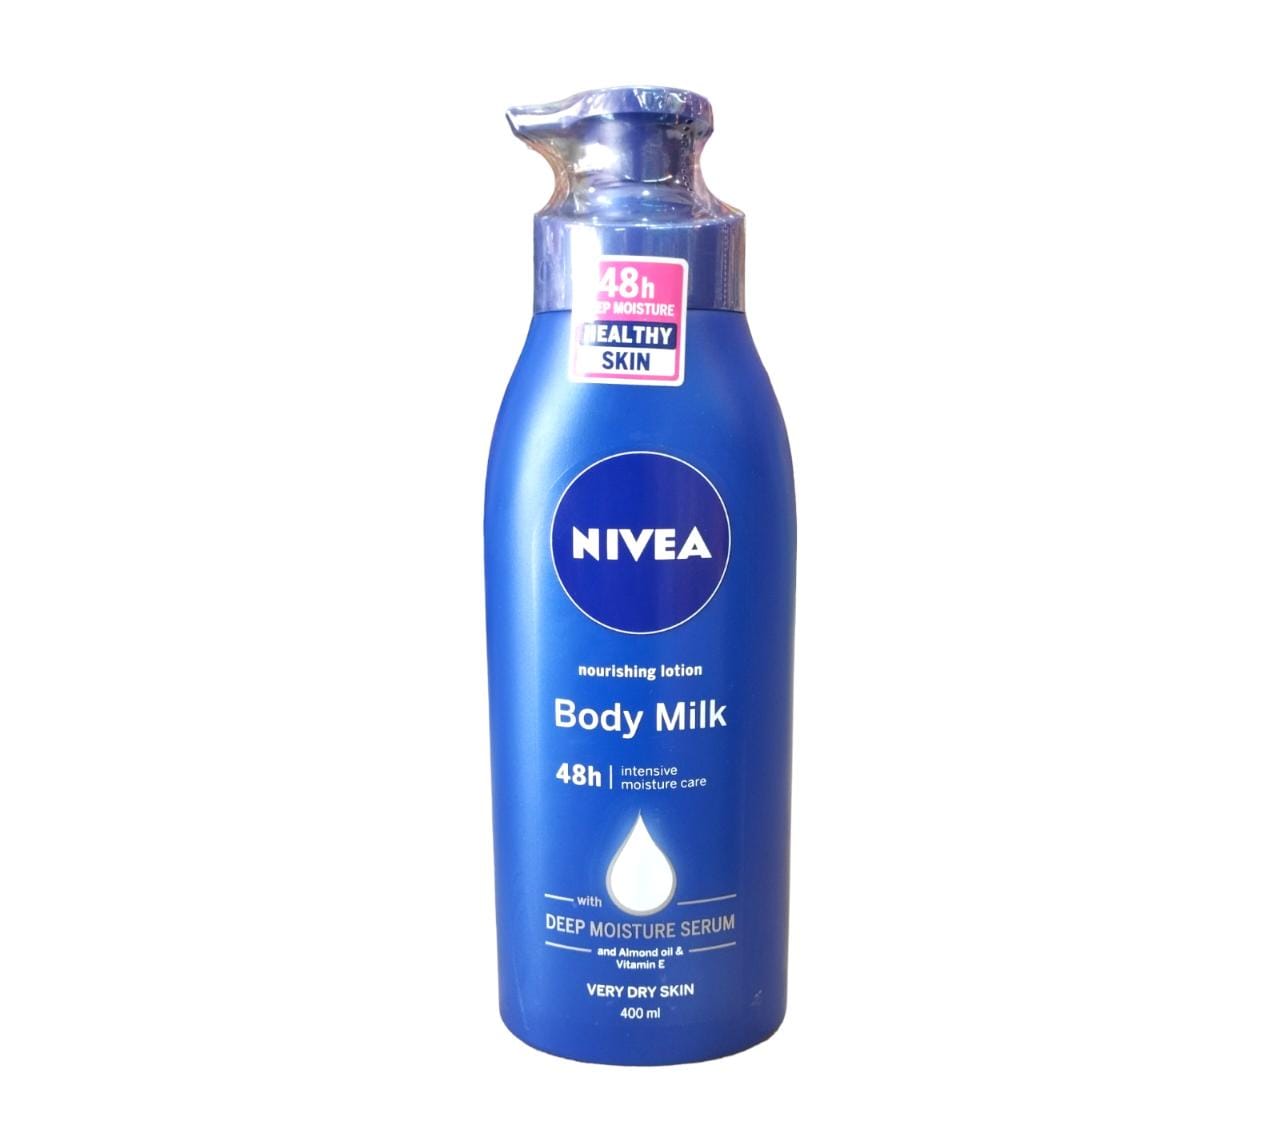 Nivea body milk